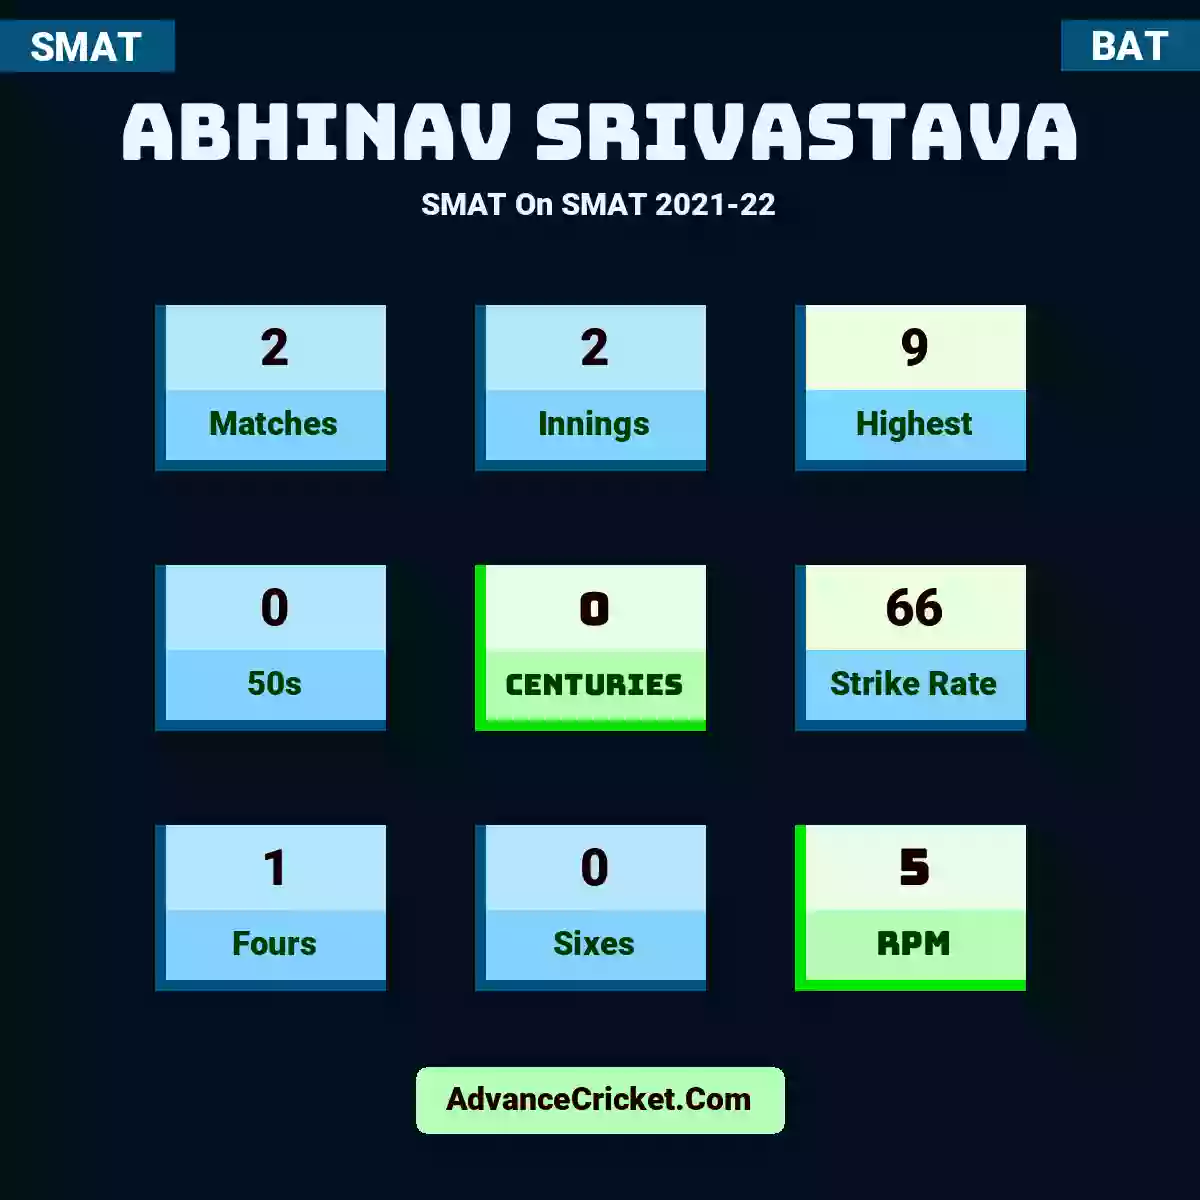 Abhinav Srivastava SMAT  On SMAT 2021-22, Abhinav Srivastava played 2 matches, scored 9 runs as highest, 0 half-centuries, and 0 centuries, with a strike rate of 66. A.Srivastava hit 1 fours and 0 sixes, with an RPM of 5.